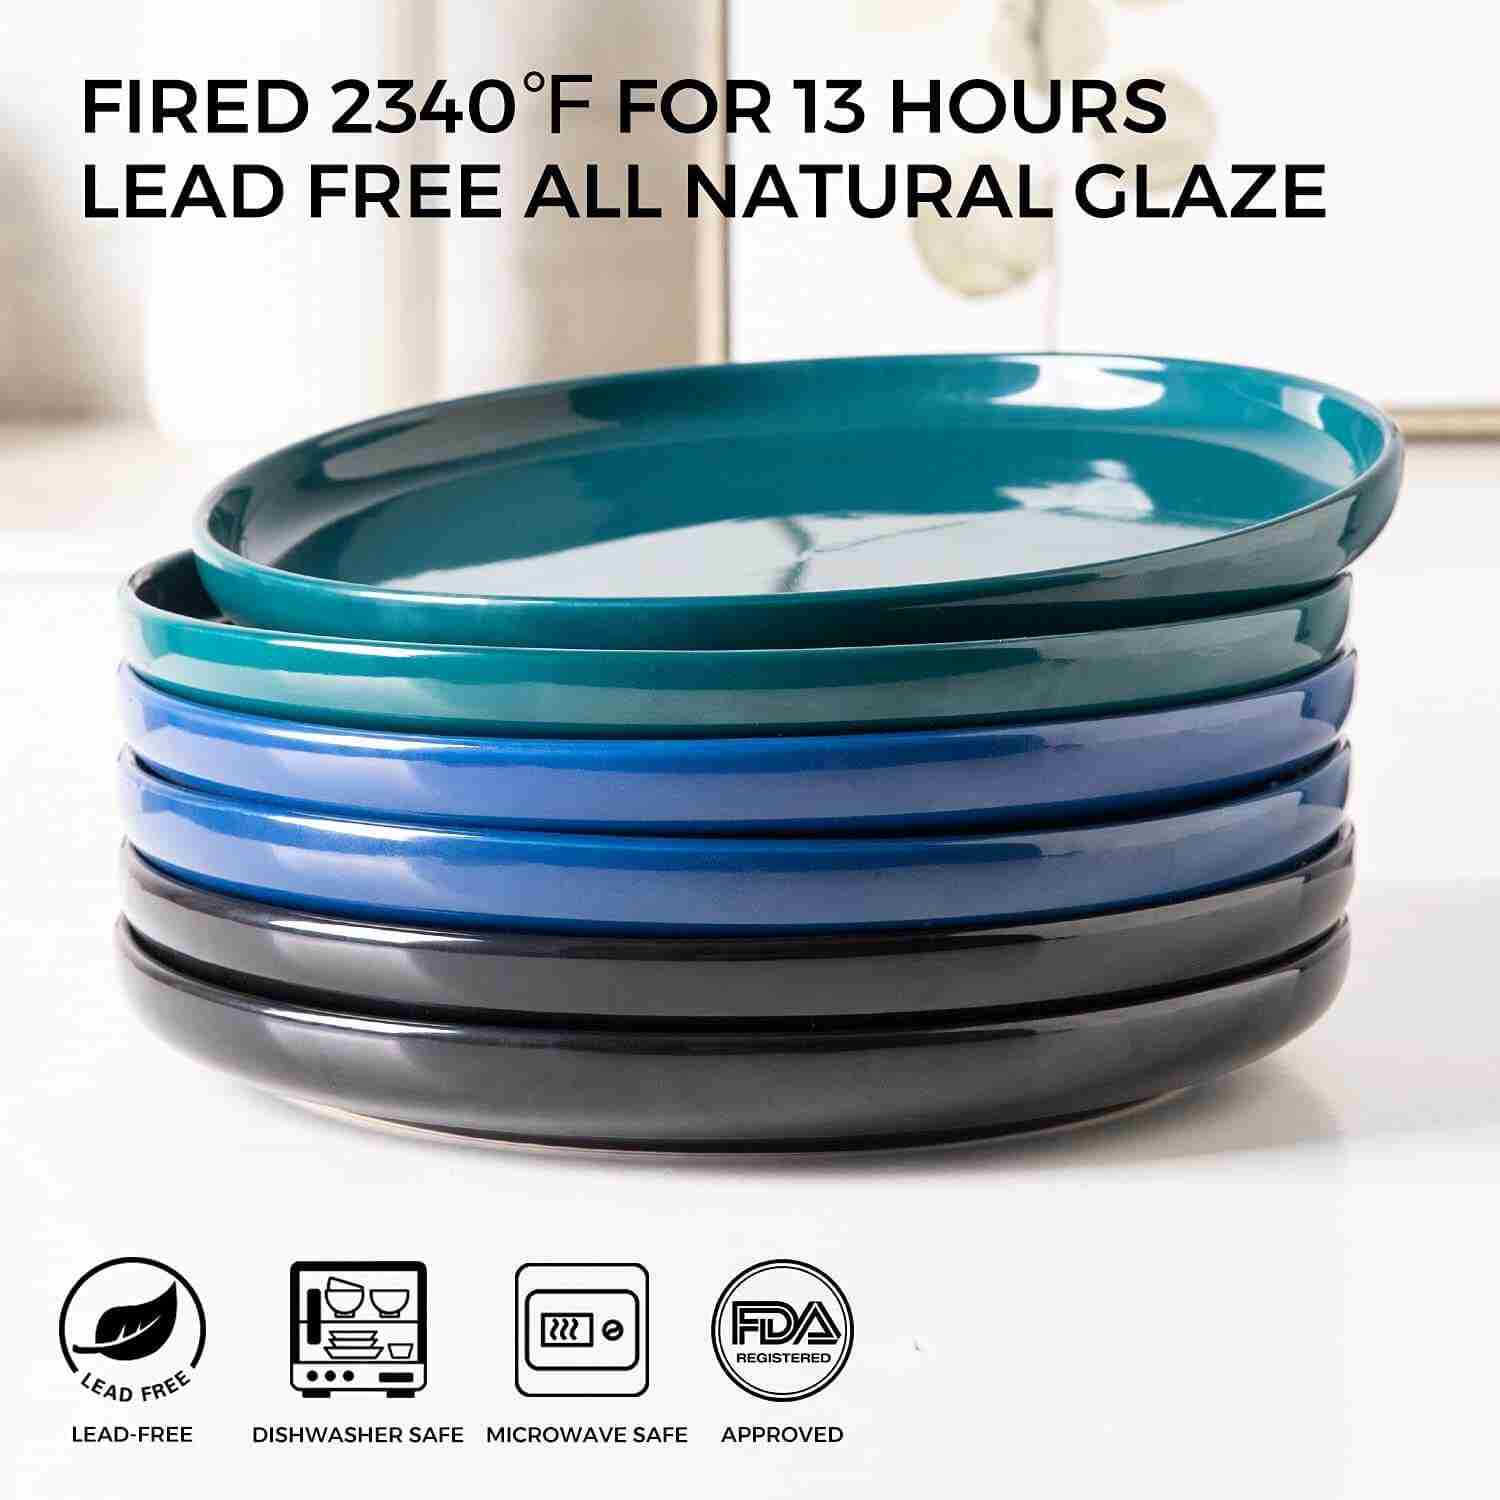 Amorarc ceramic dinner plates for oven use